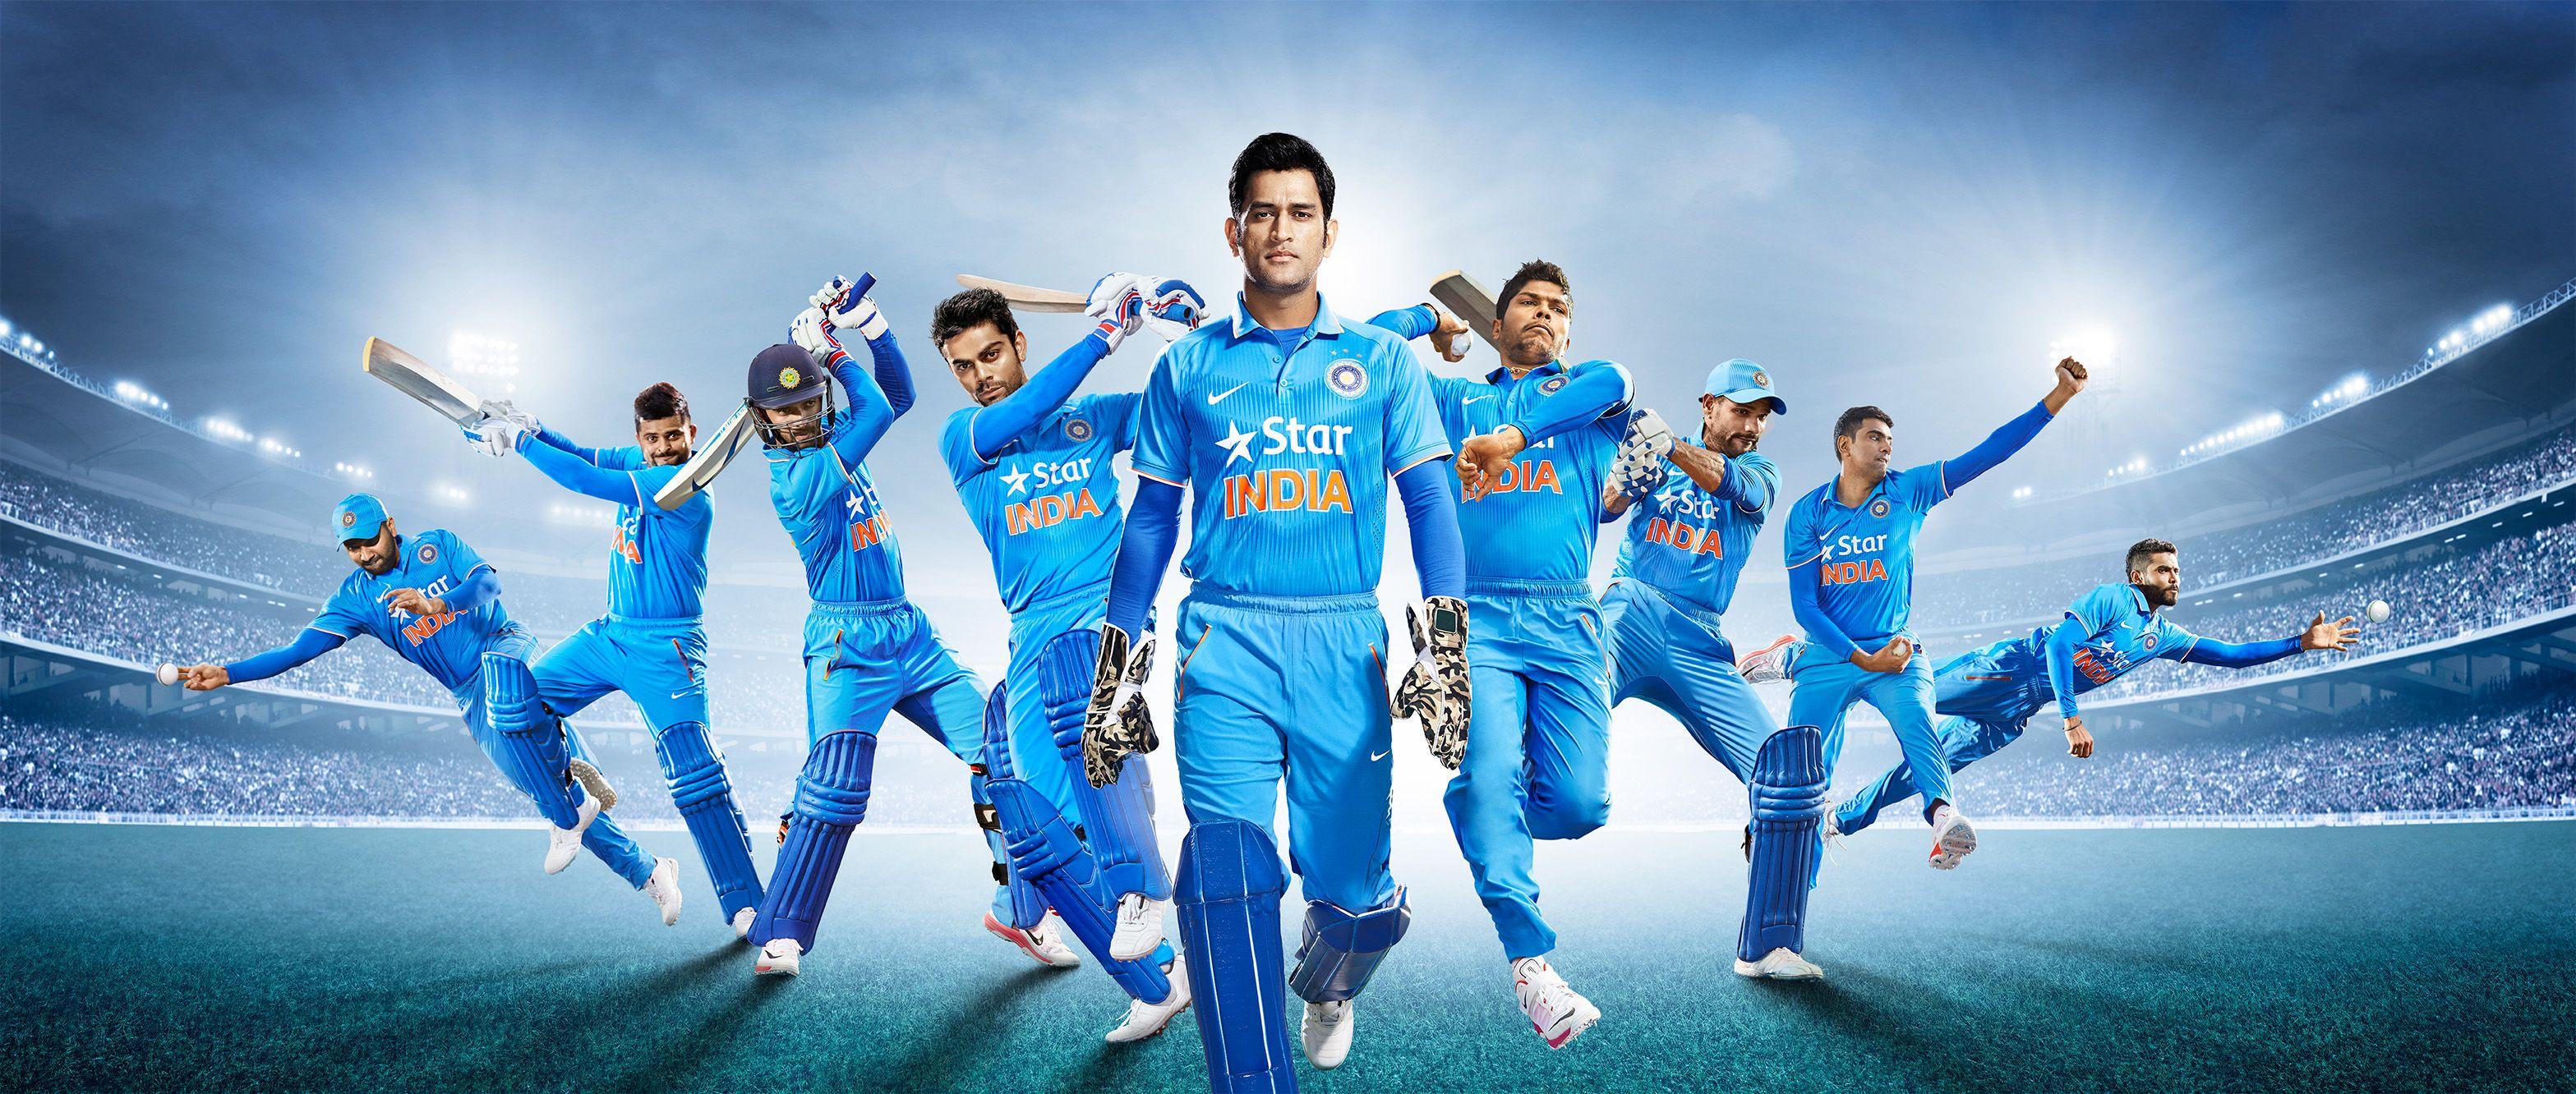 India Cricket Team Wallpaper Free India Cricket Team Background